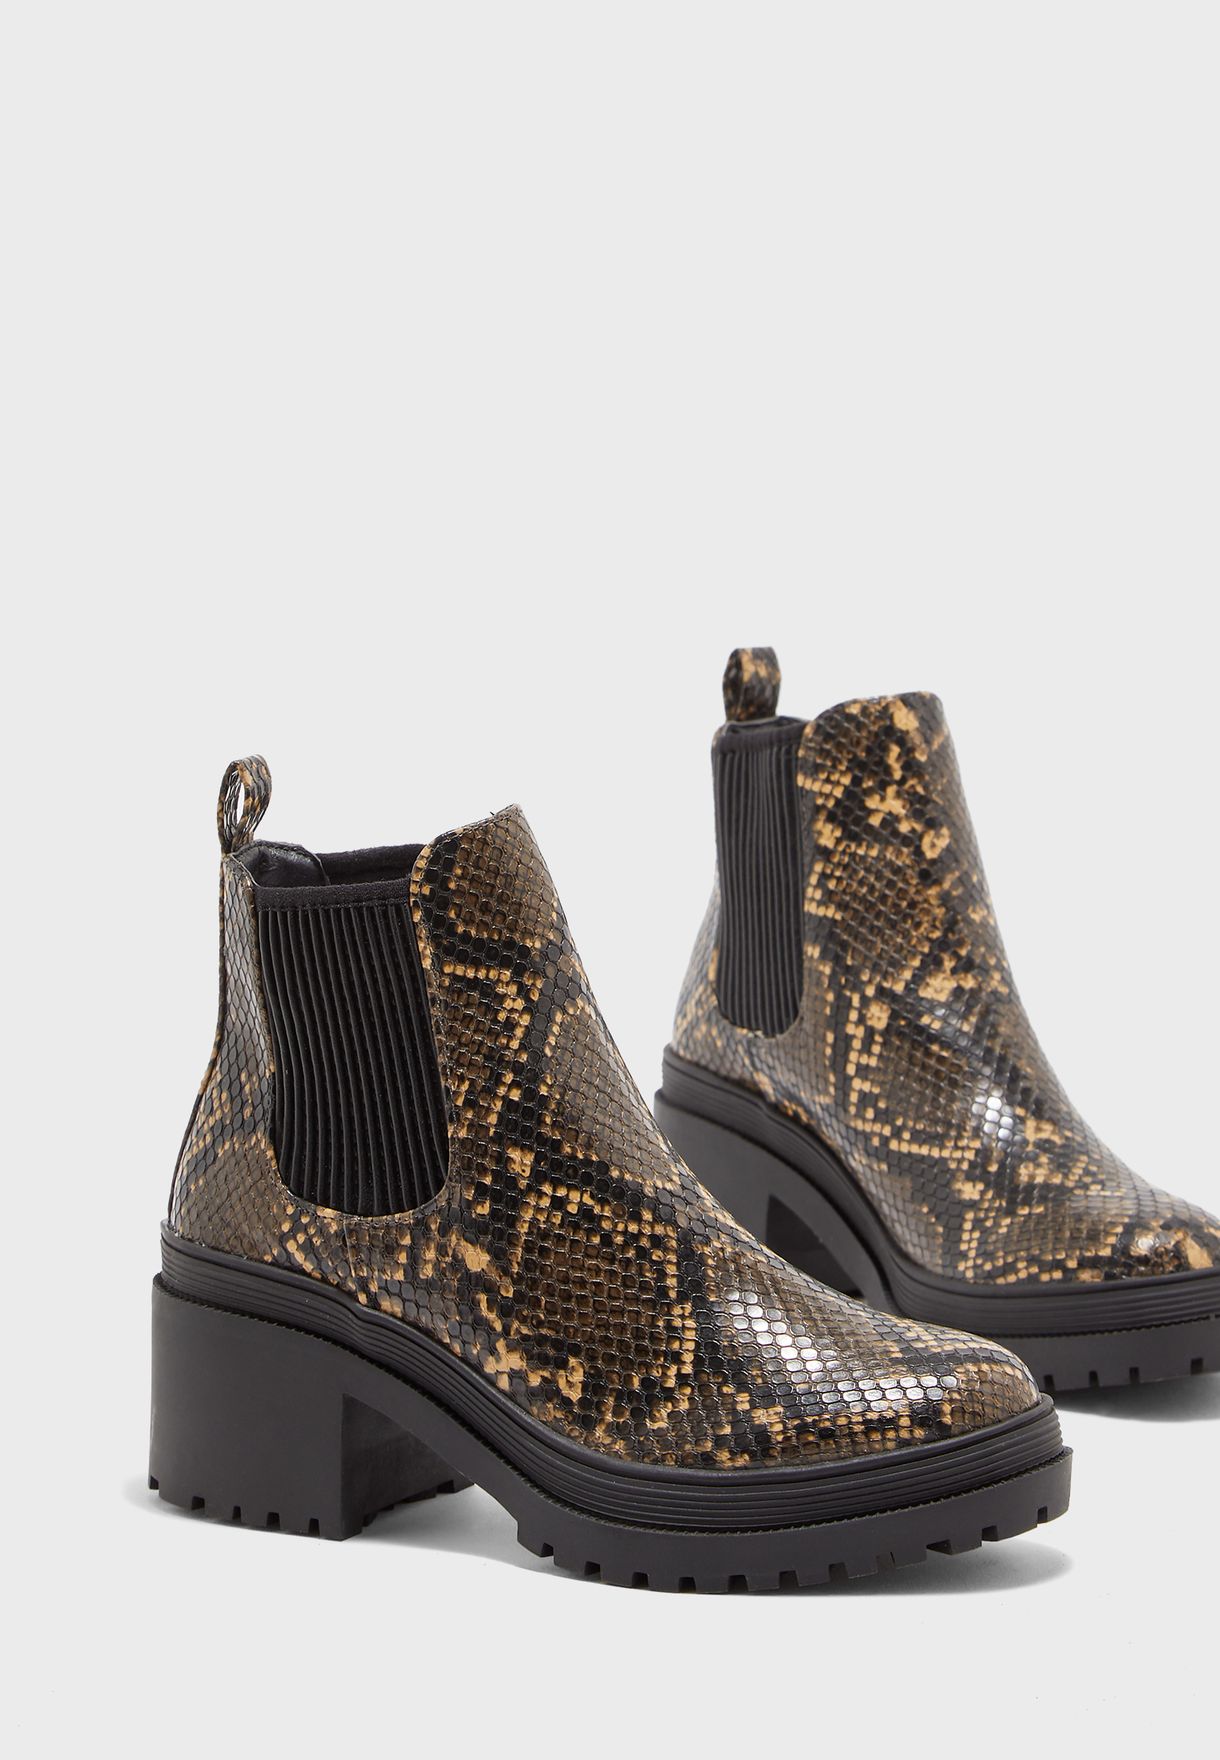 topshop snakeskin boots